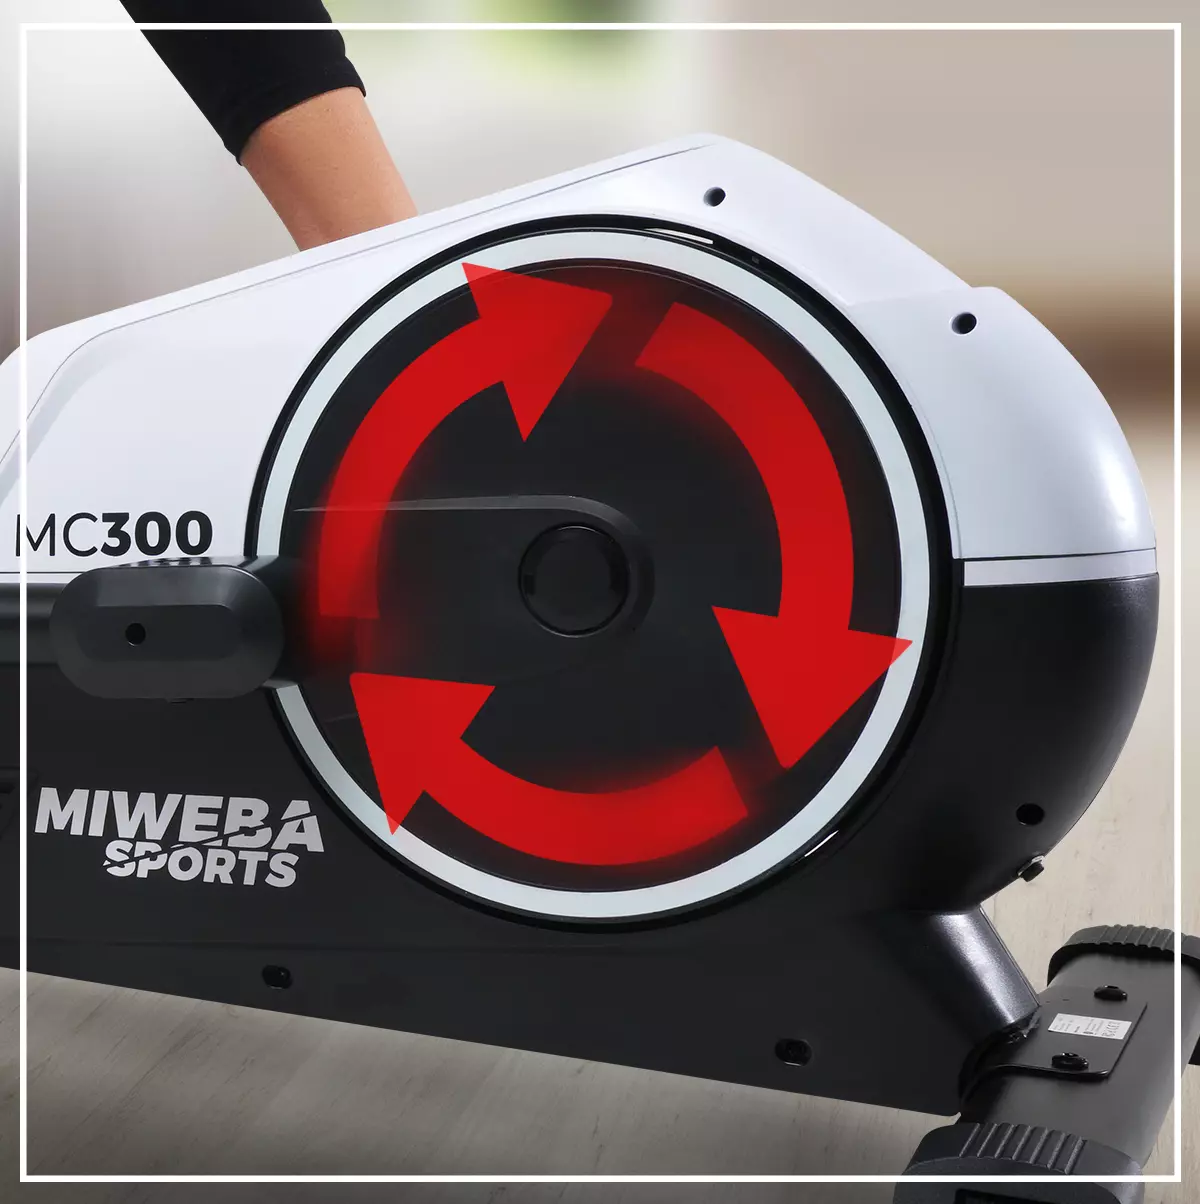 Magnetbremse mit Schwungmasse des Miweba Sports Crosstrainers MC300